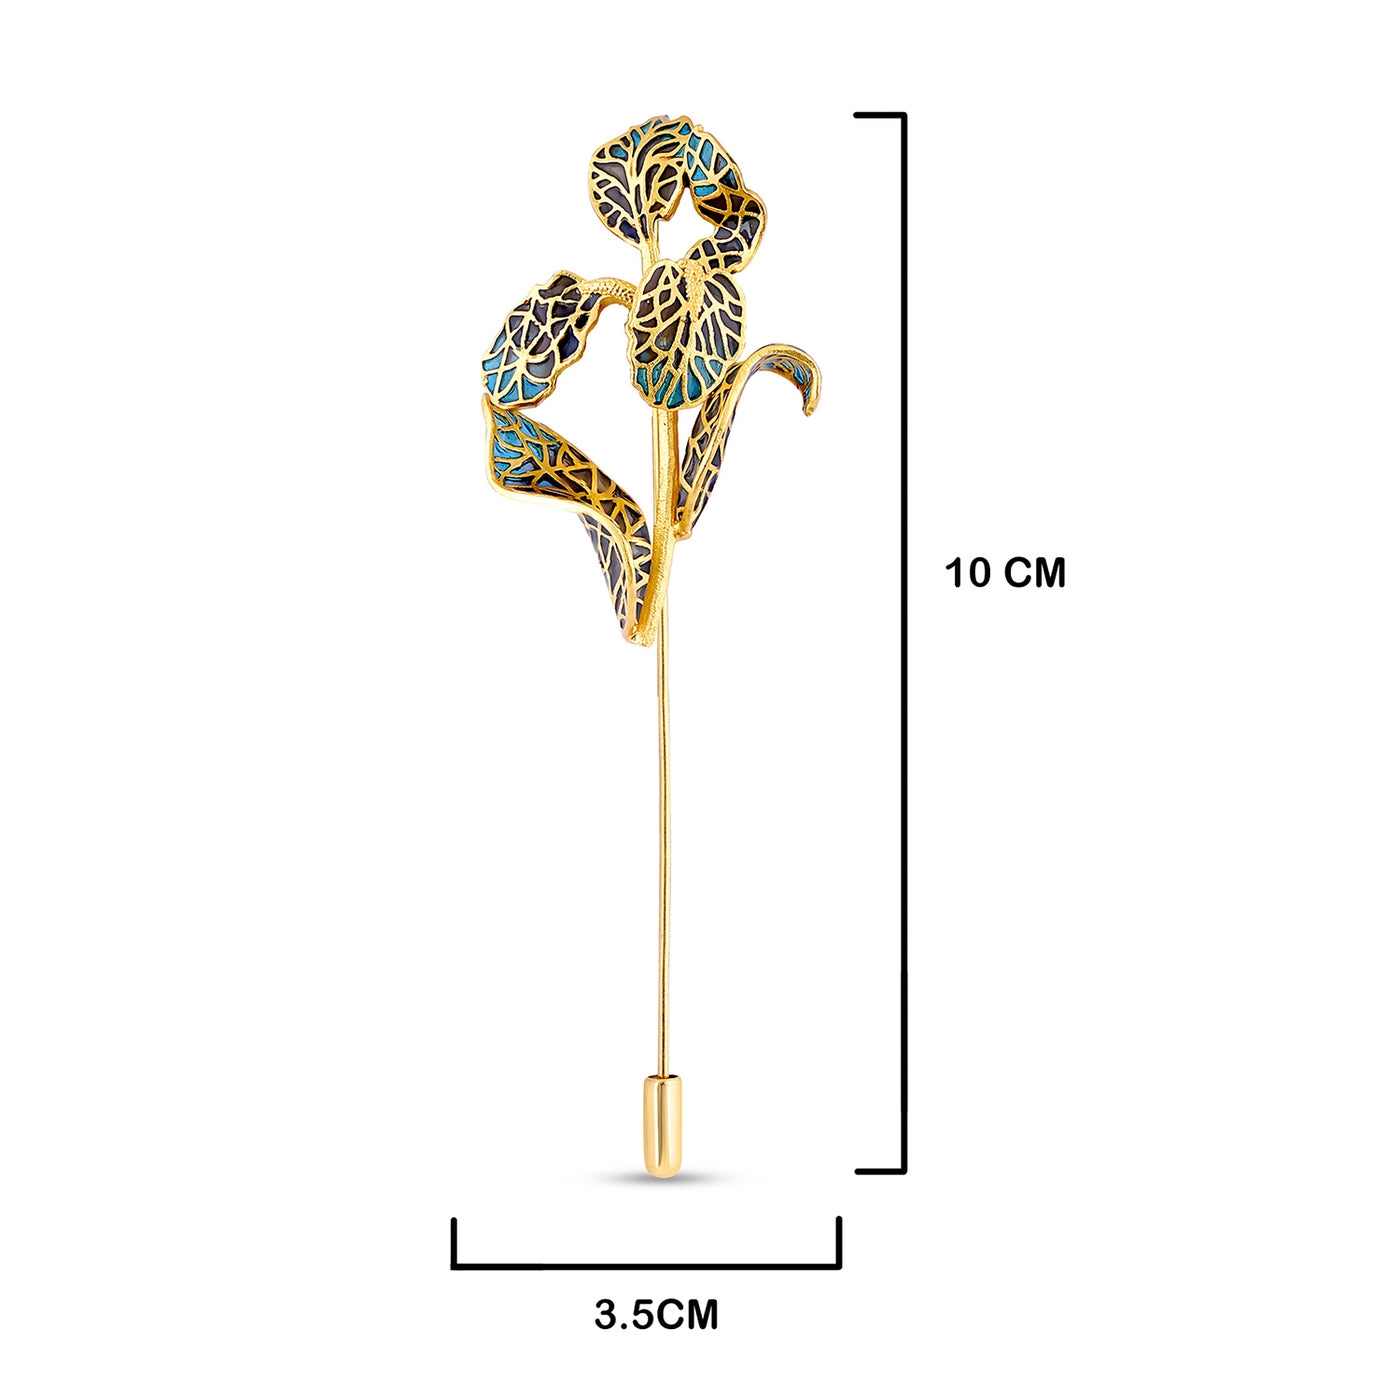 Blue Kundan Leaf Brooch with measurements in cm. 10cm by 3.5cm.